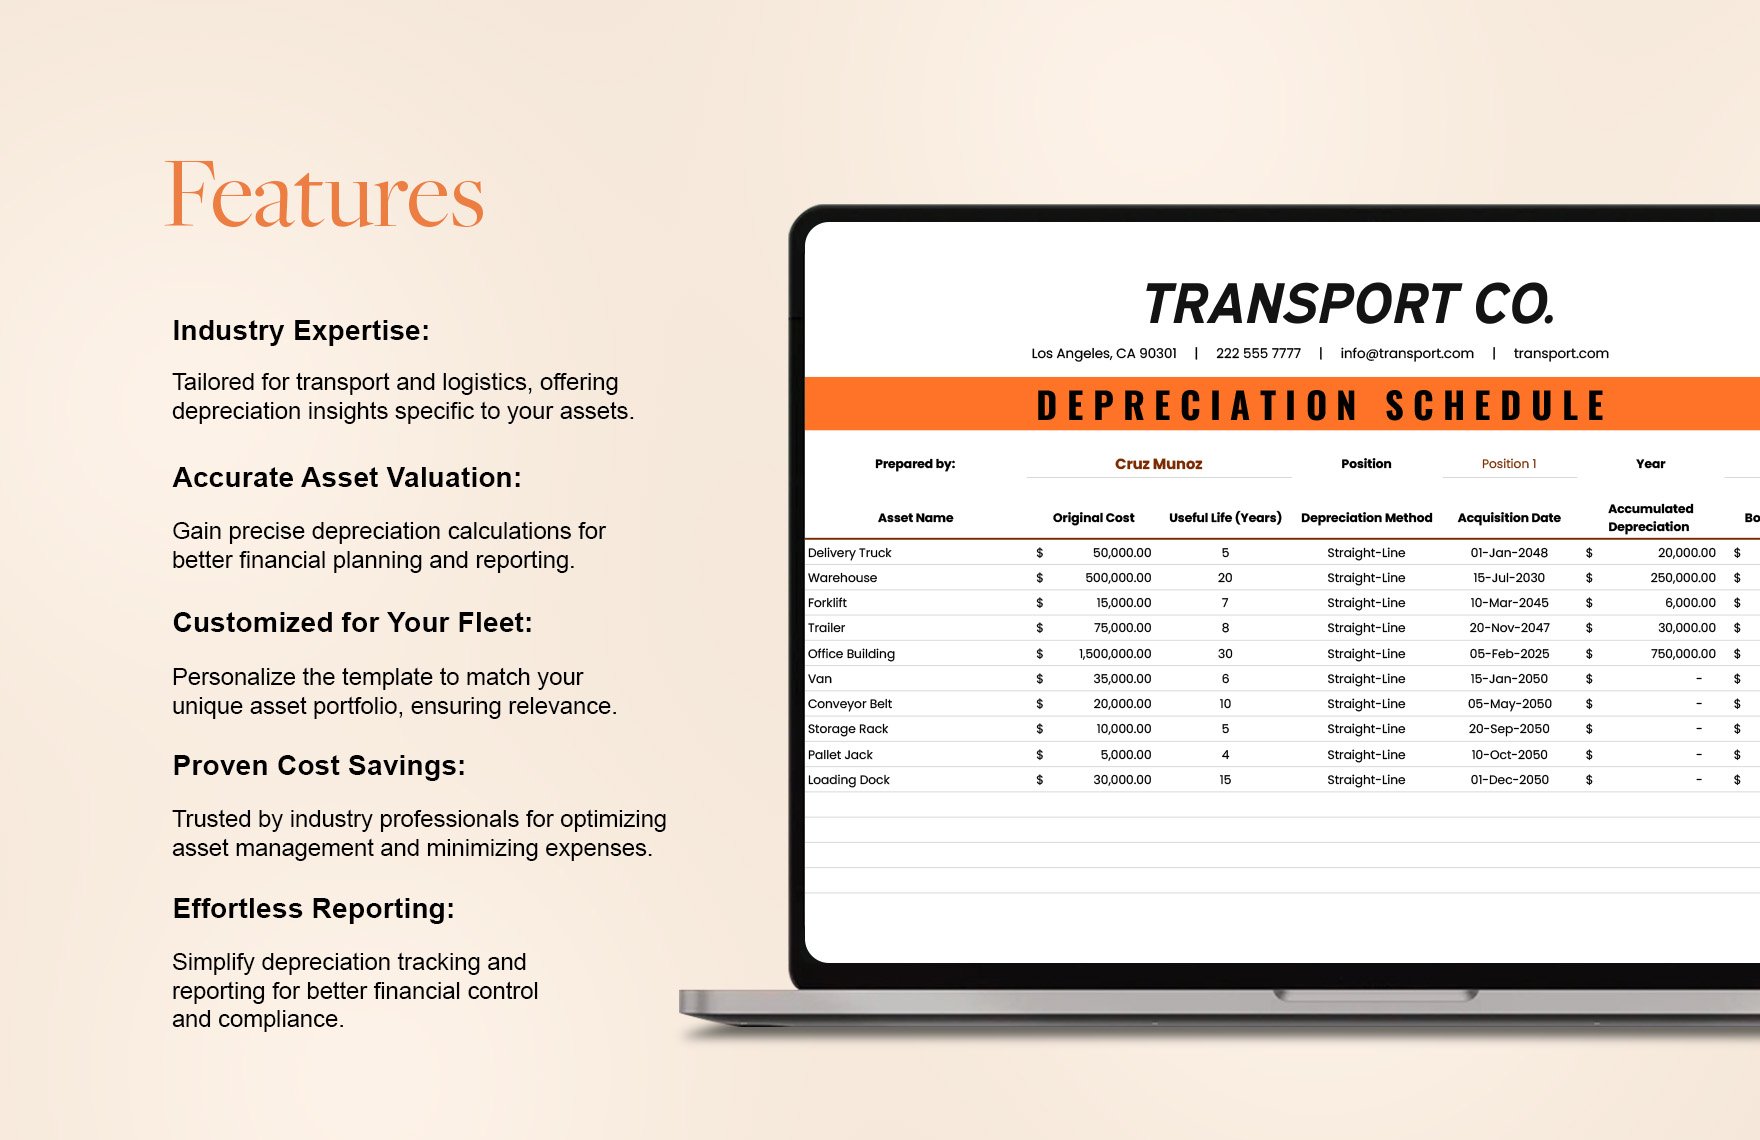 Transport and Logistics Depreciation Schedule Template